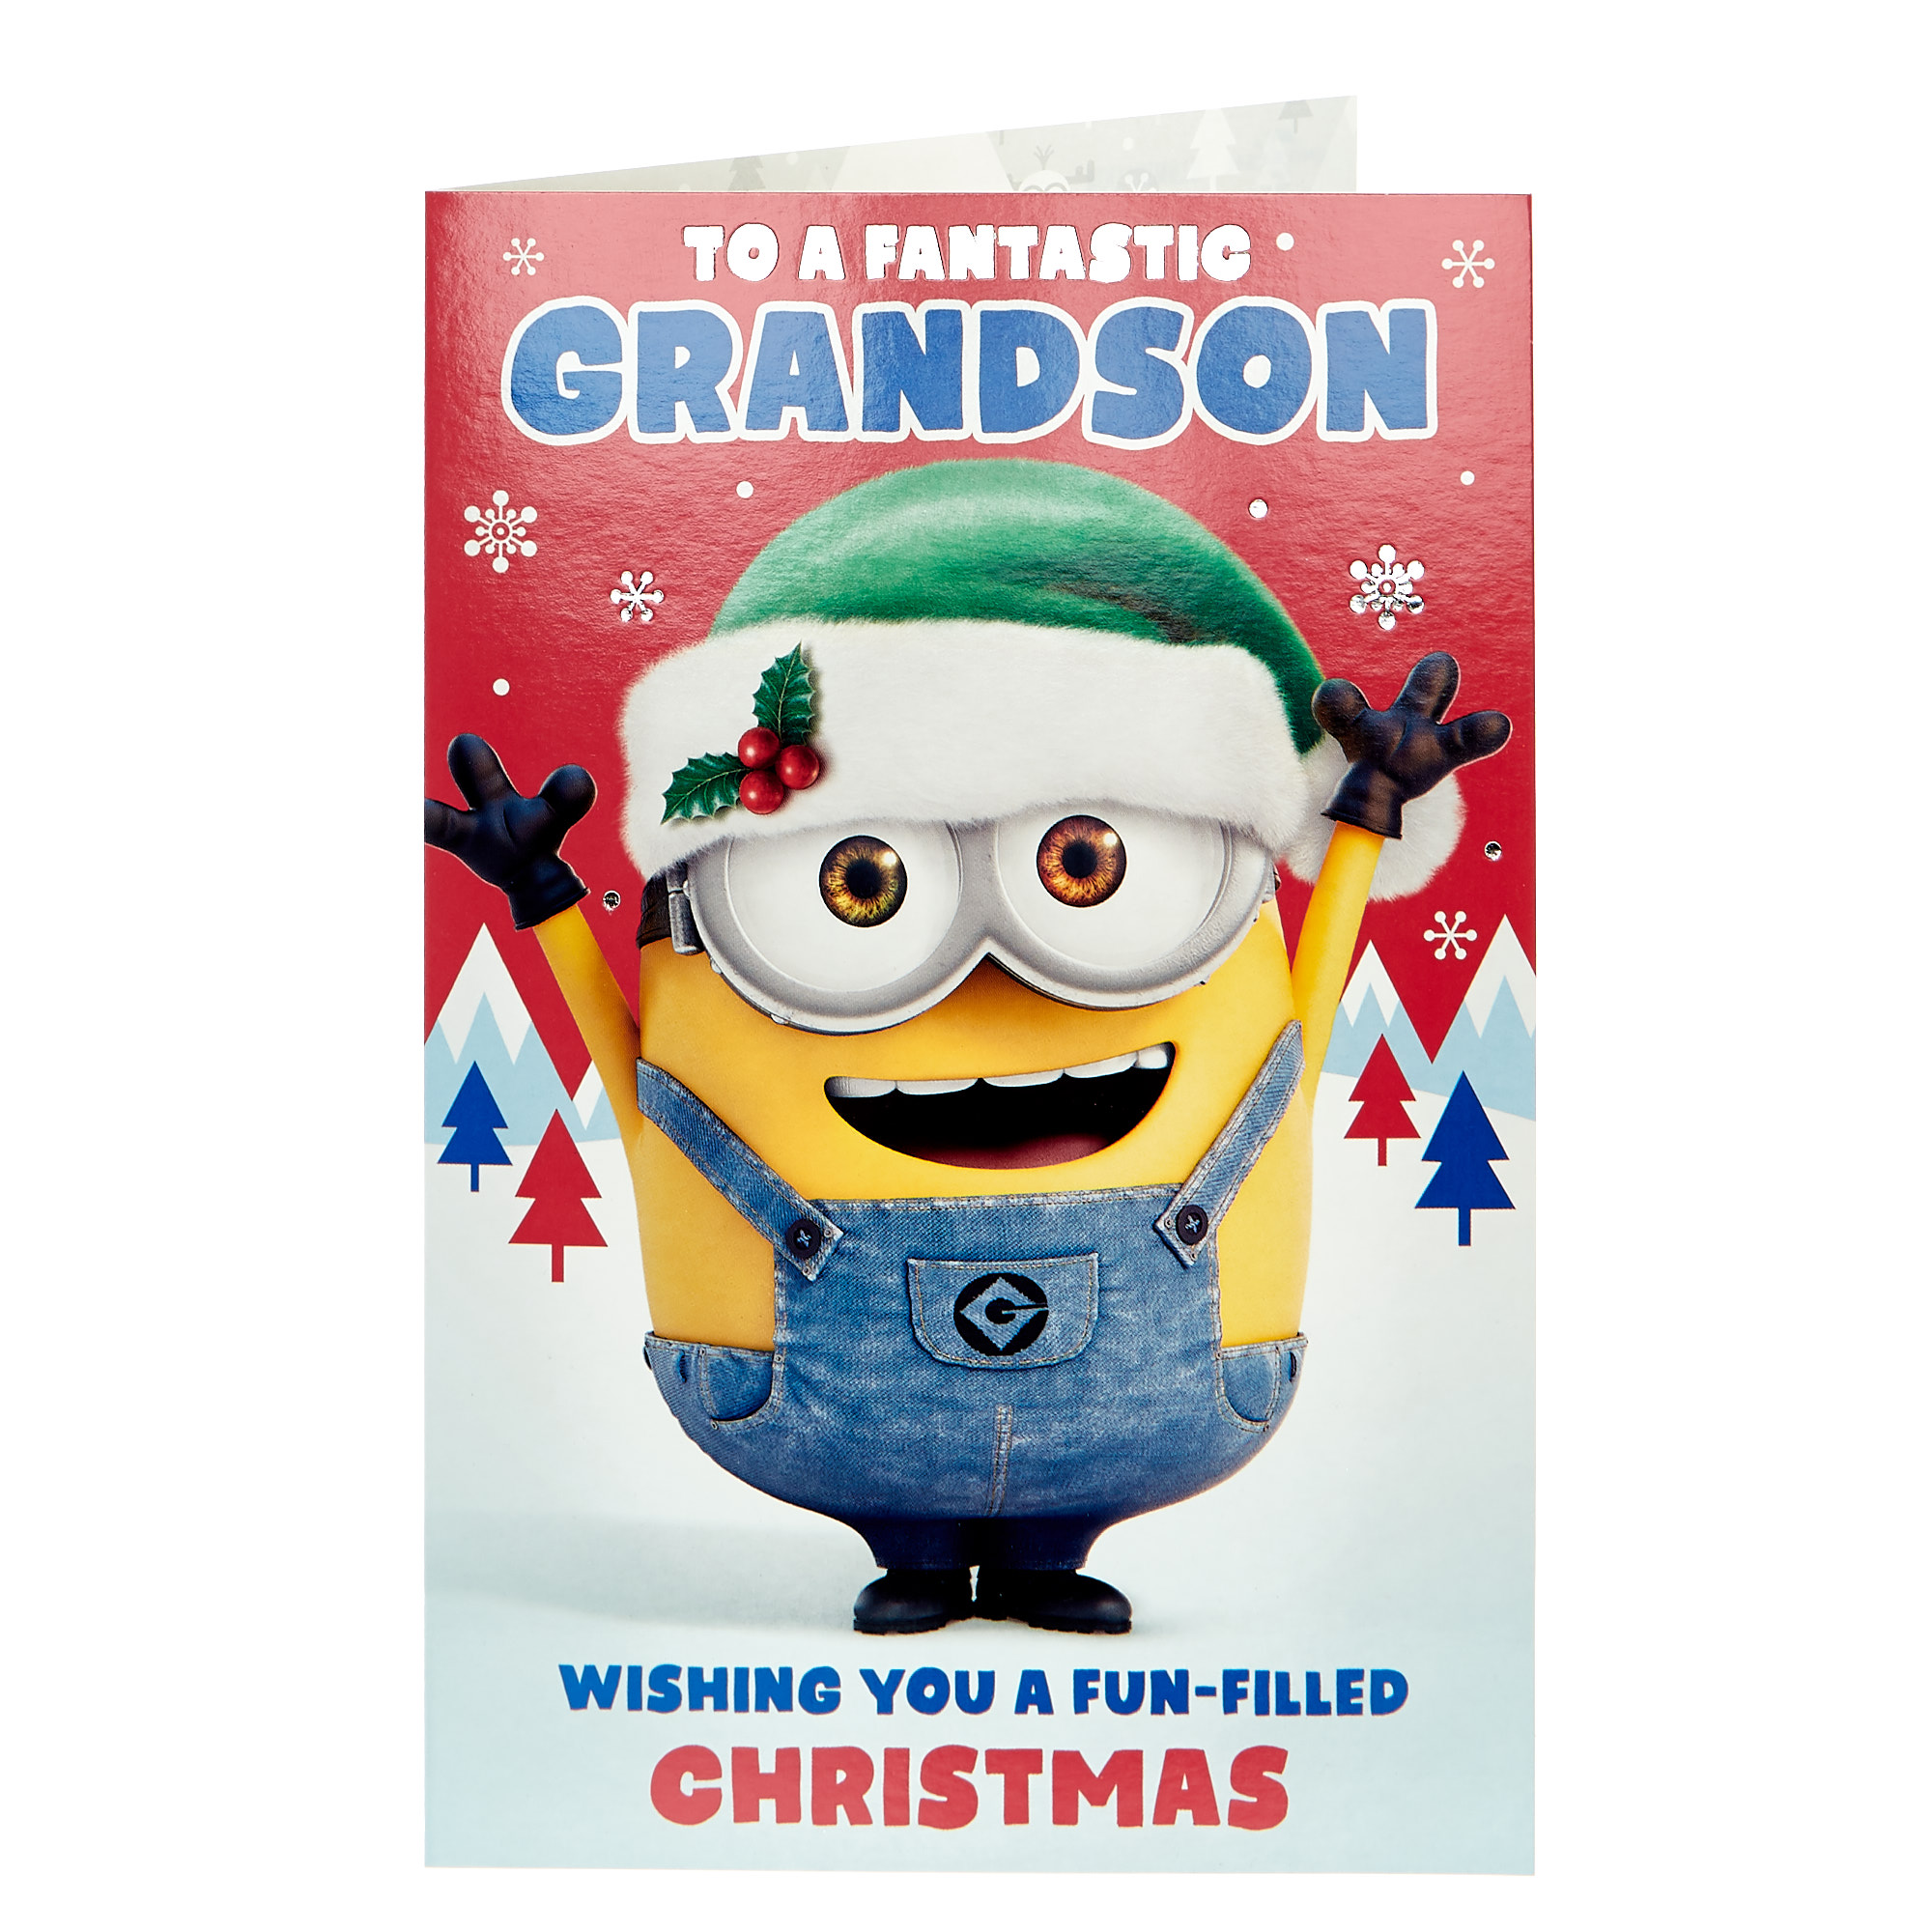 Minions Christmas Card - Fantastic Grandson